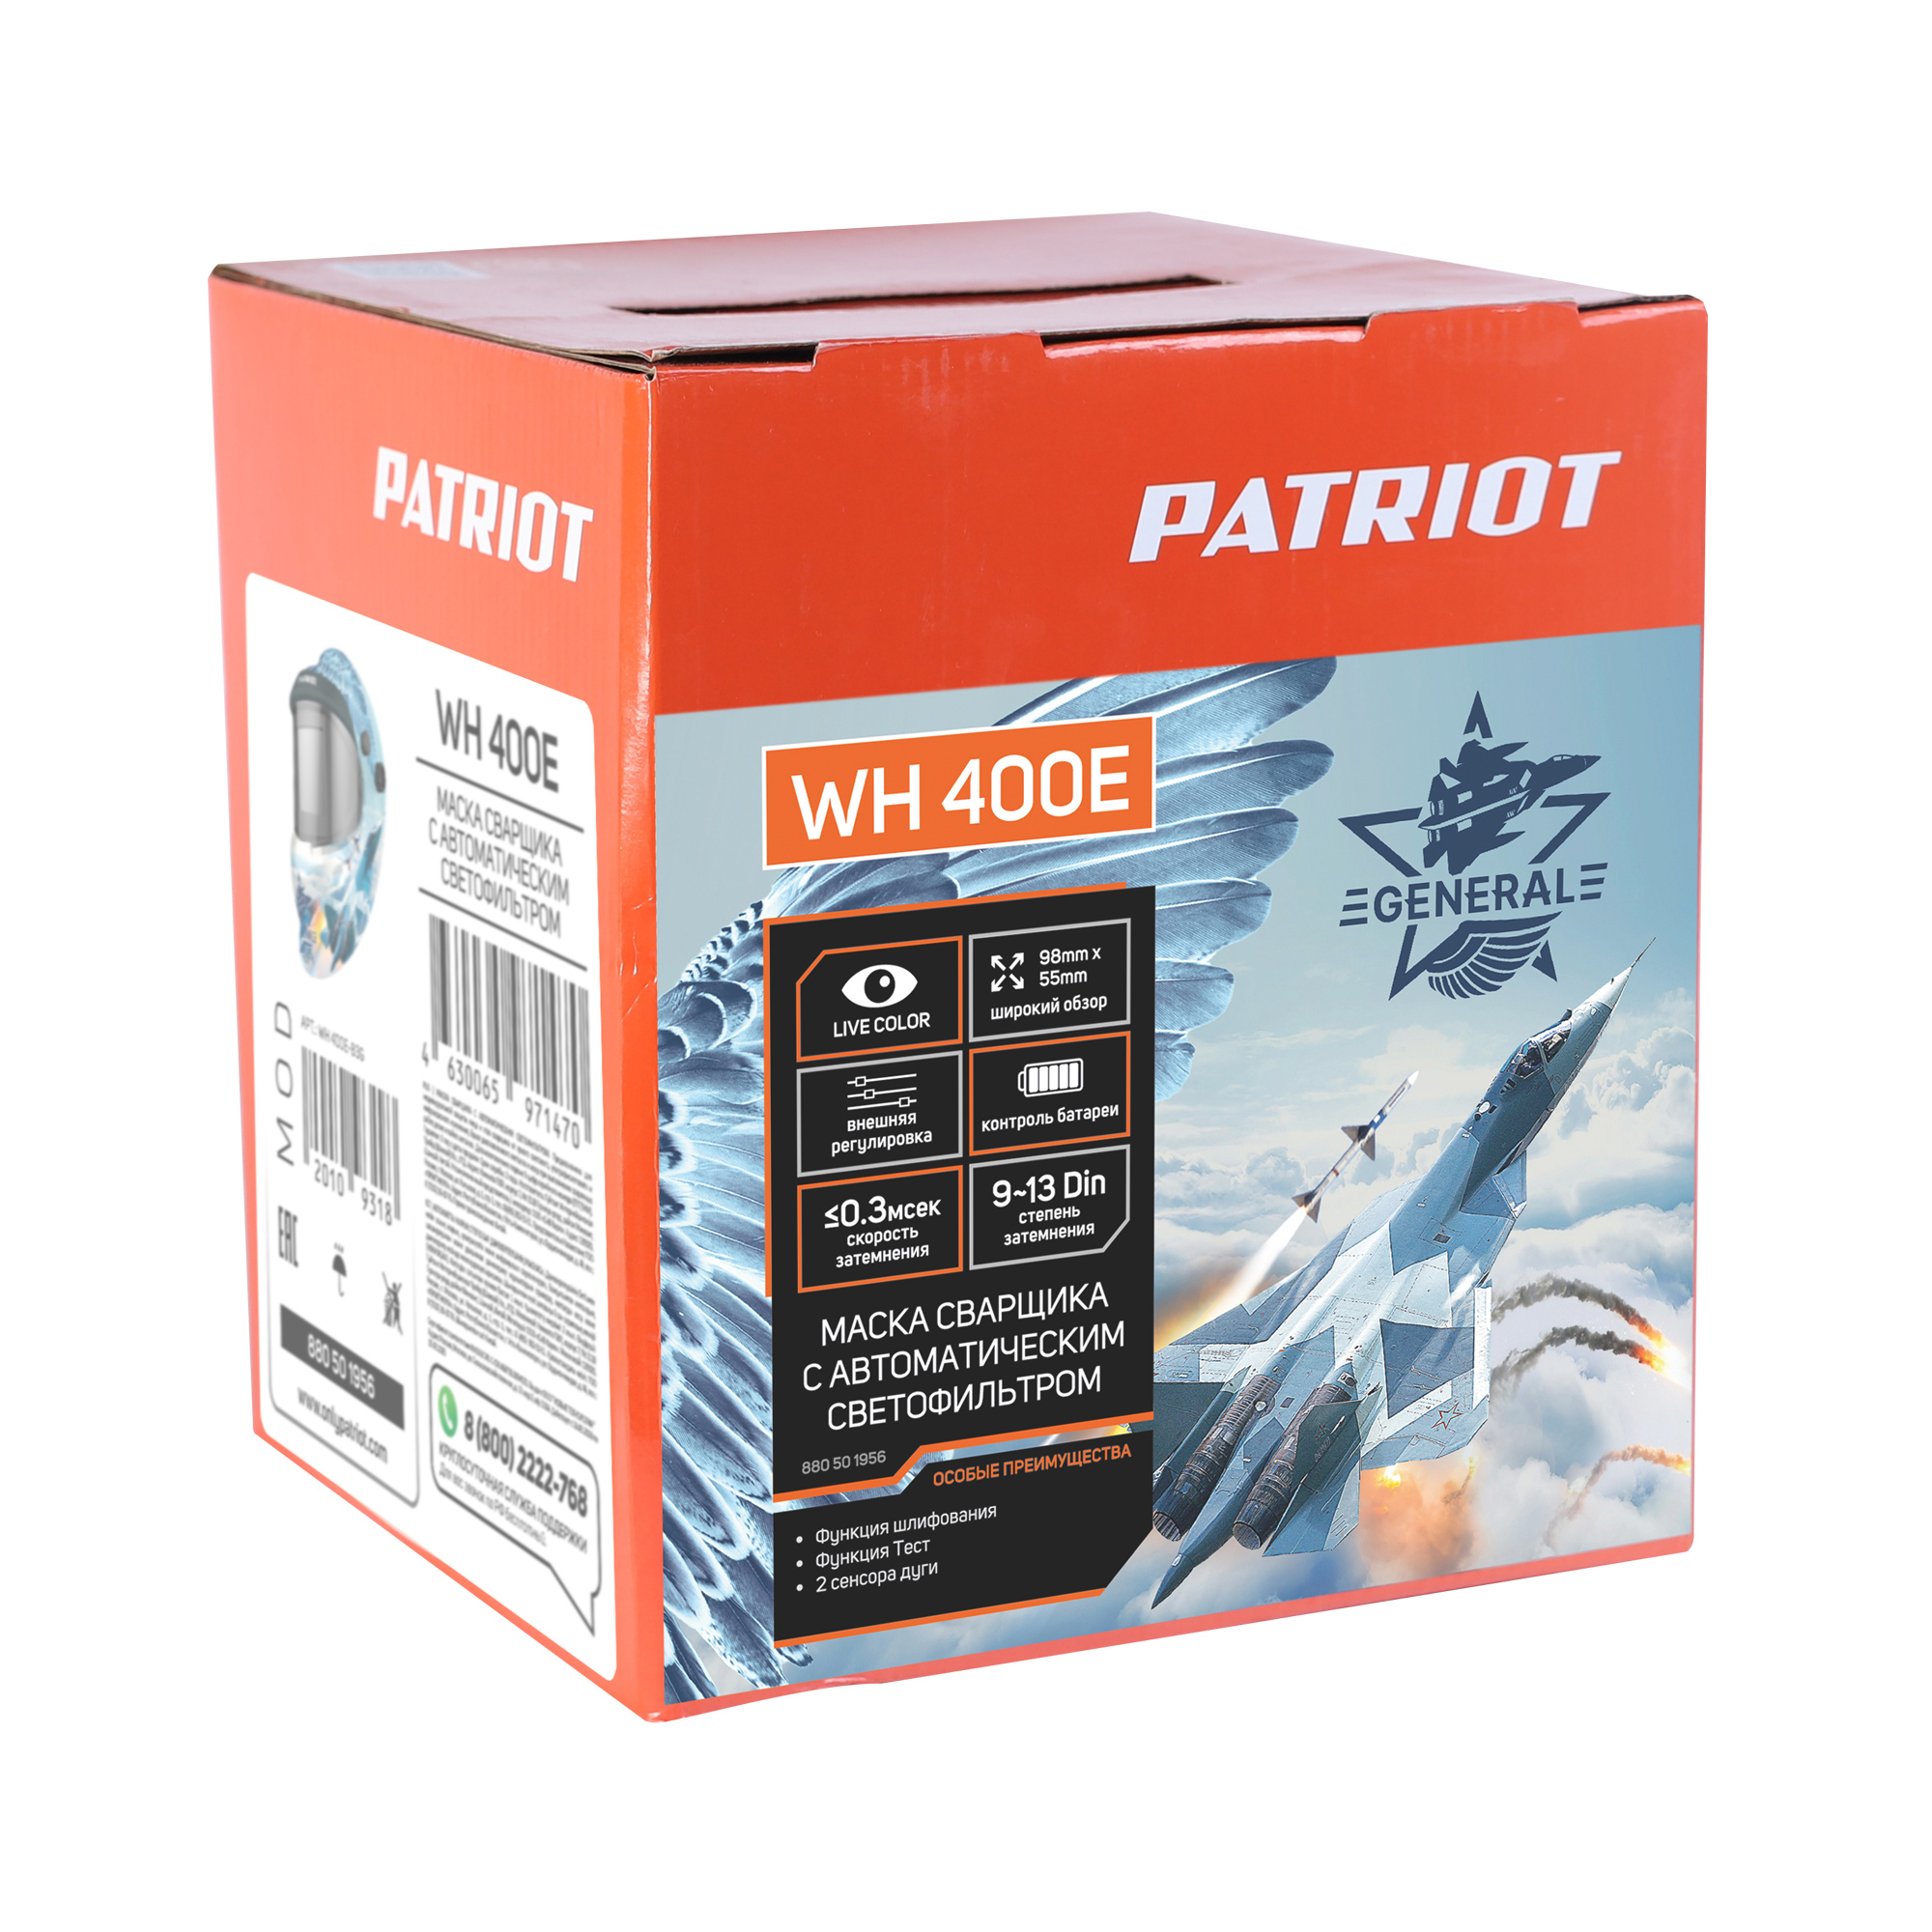  сварщика Patriot WH 400 E на официальном сайте.